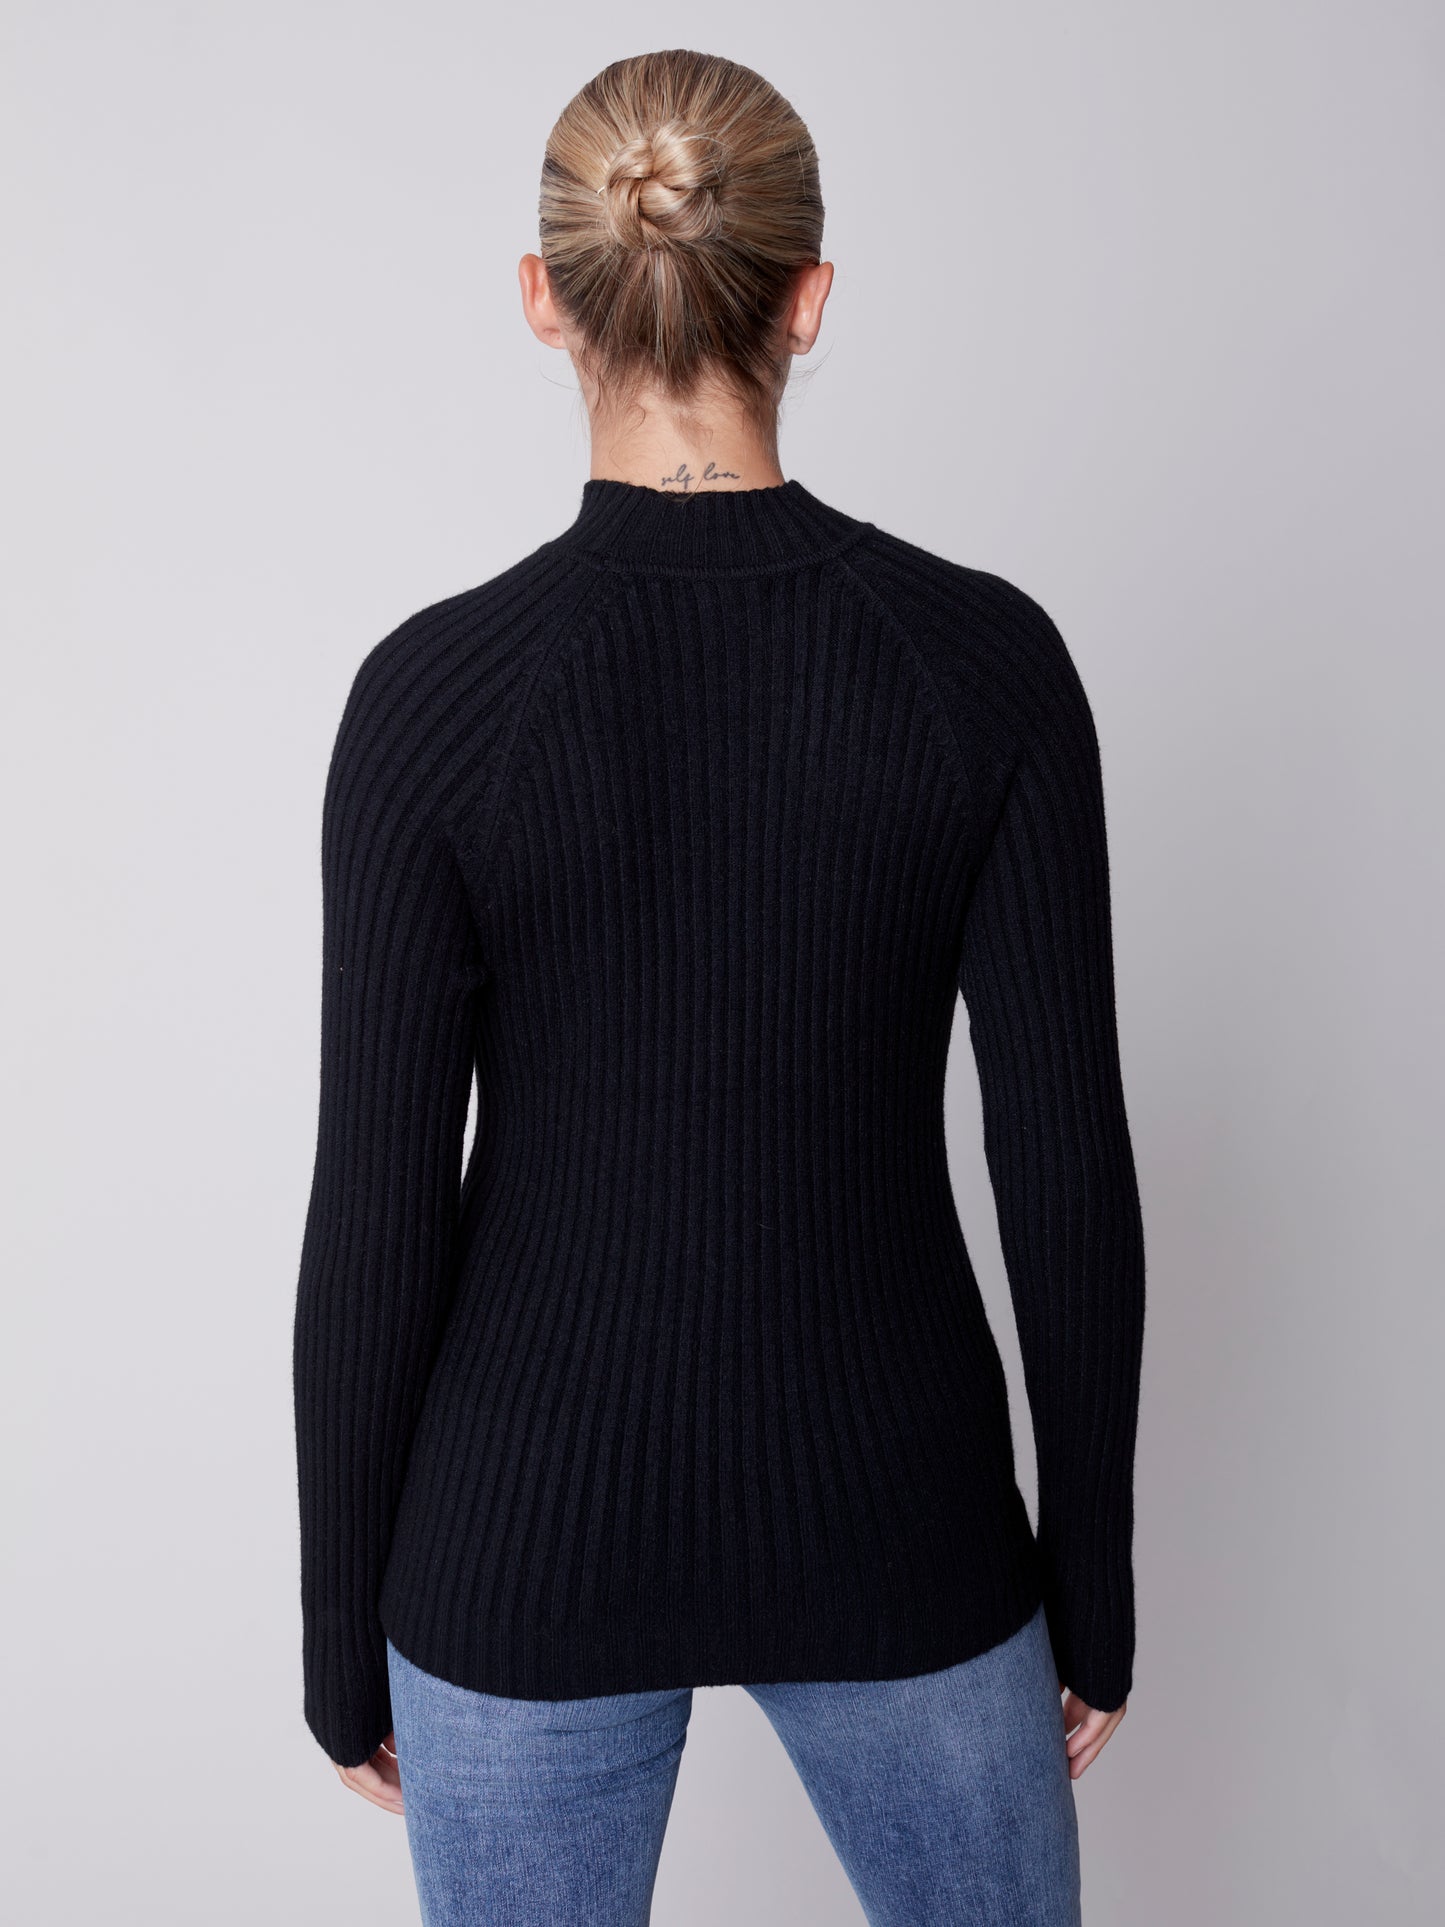 Charlie B Mock Neck Chest Rib Design Sweater Black C2553-736A-001